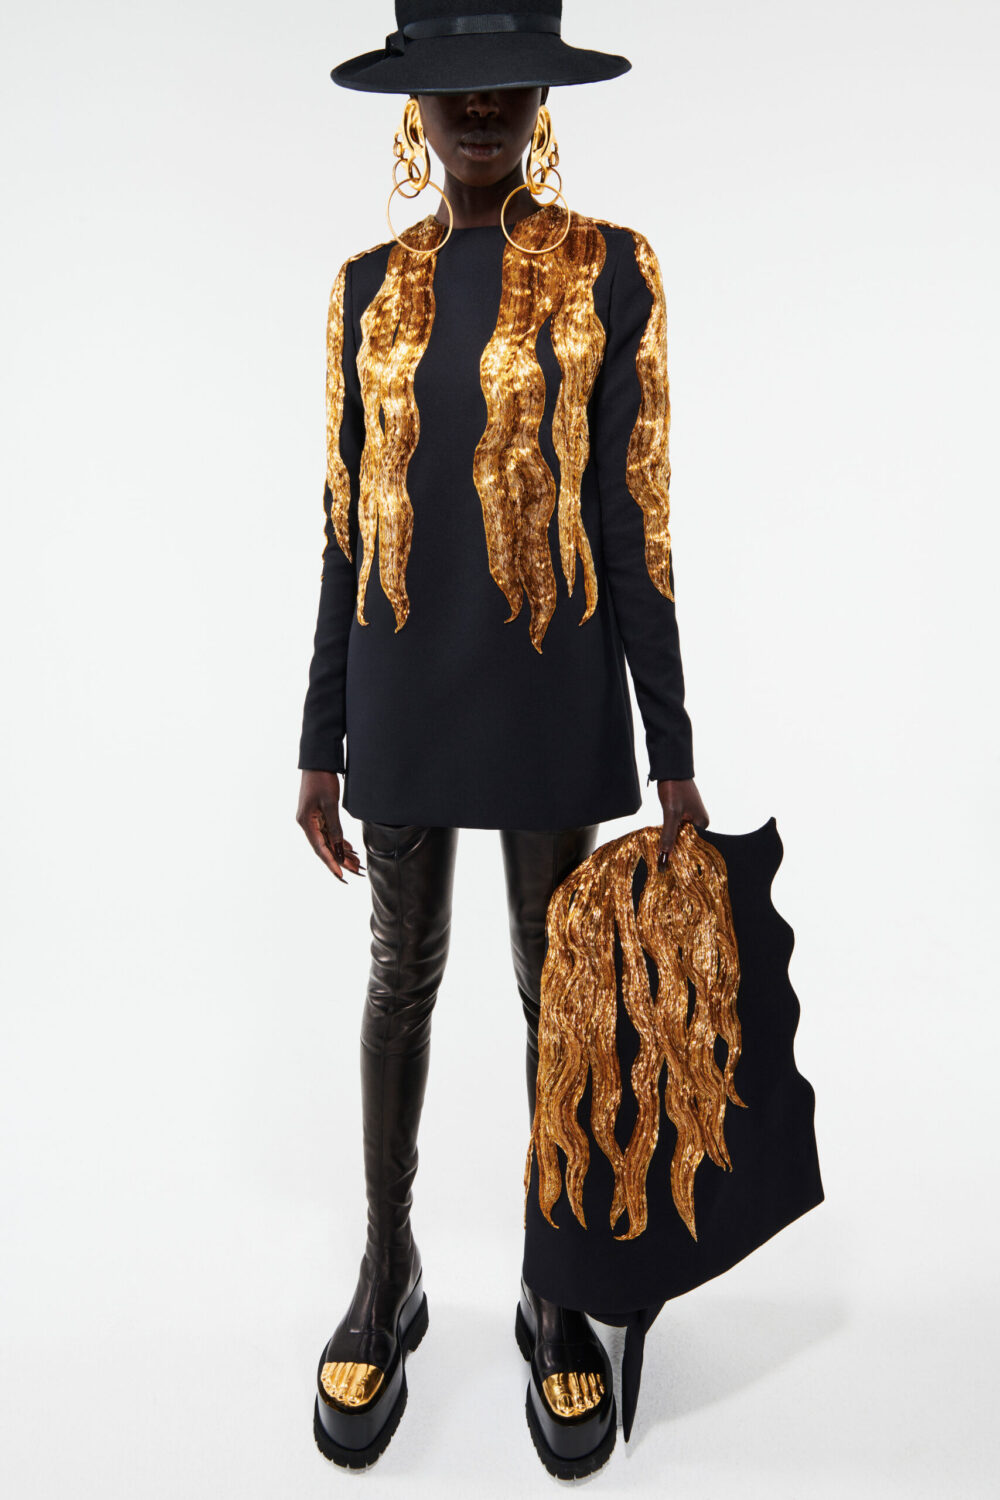 Schiaparelli Spring 2021 Couture Collection by Daniel Roseberry I DreaminLace.com #couture #hautecouture